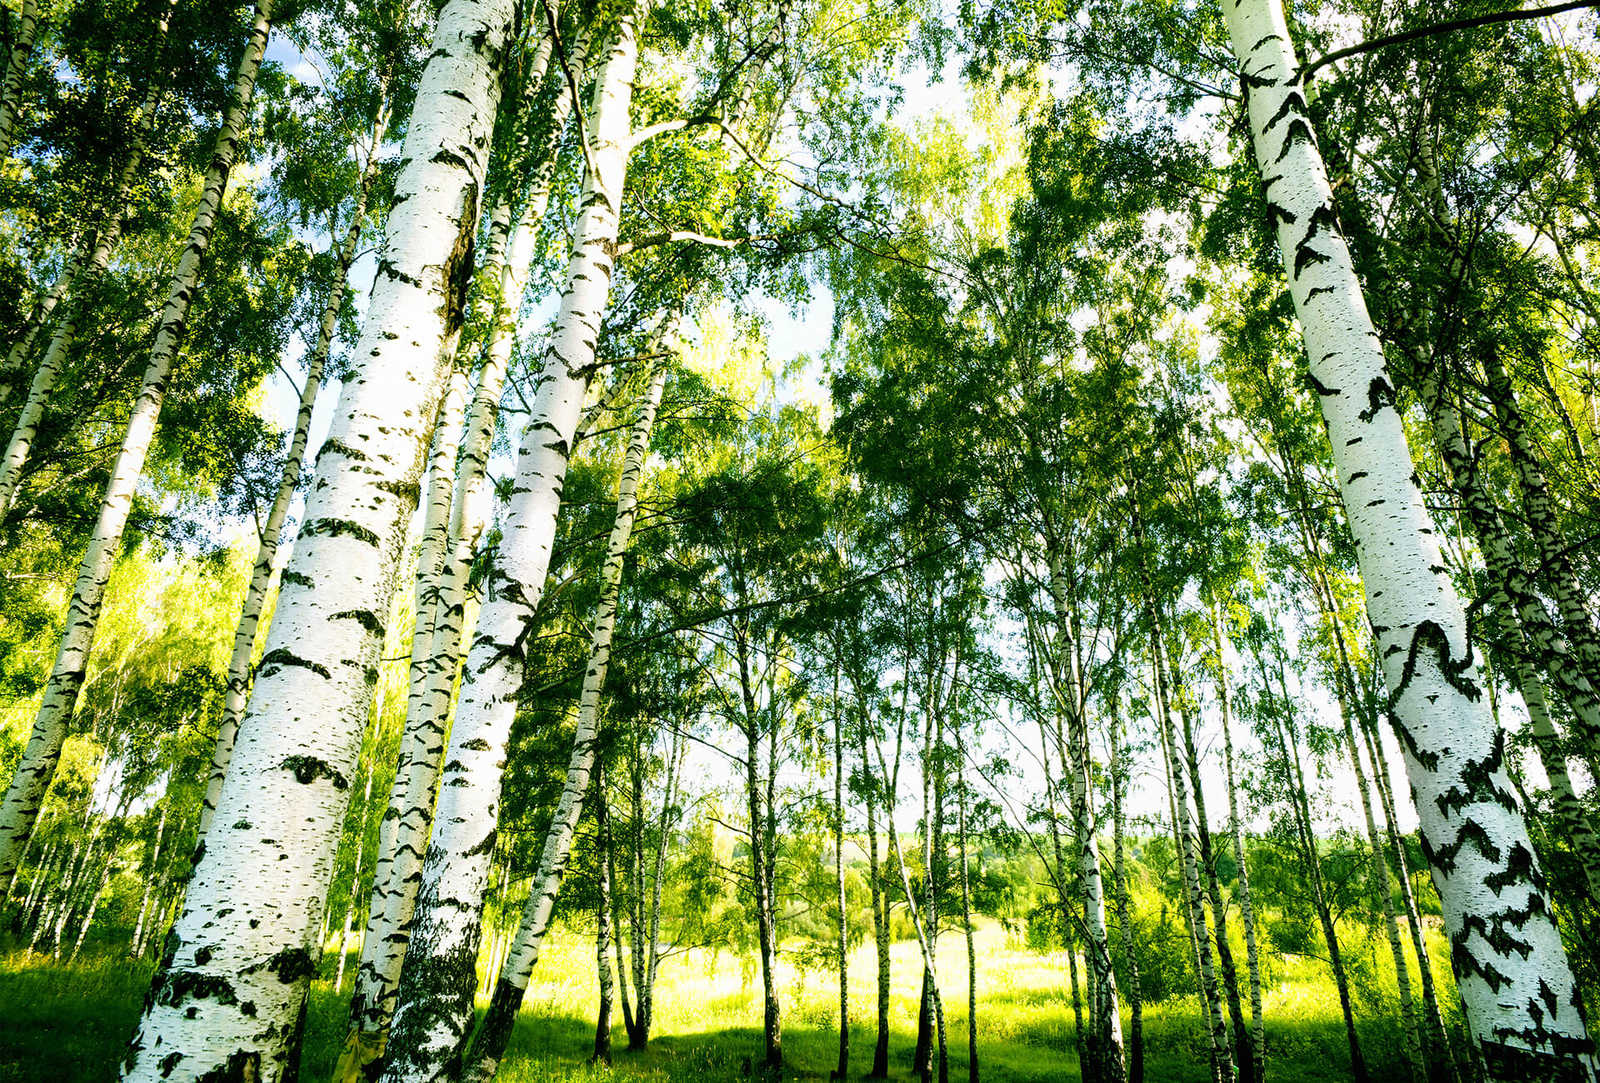         Photo wallpaper birch forest in the sunshine - green, white
    